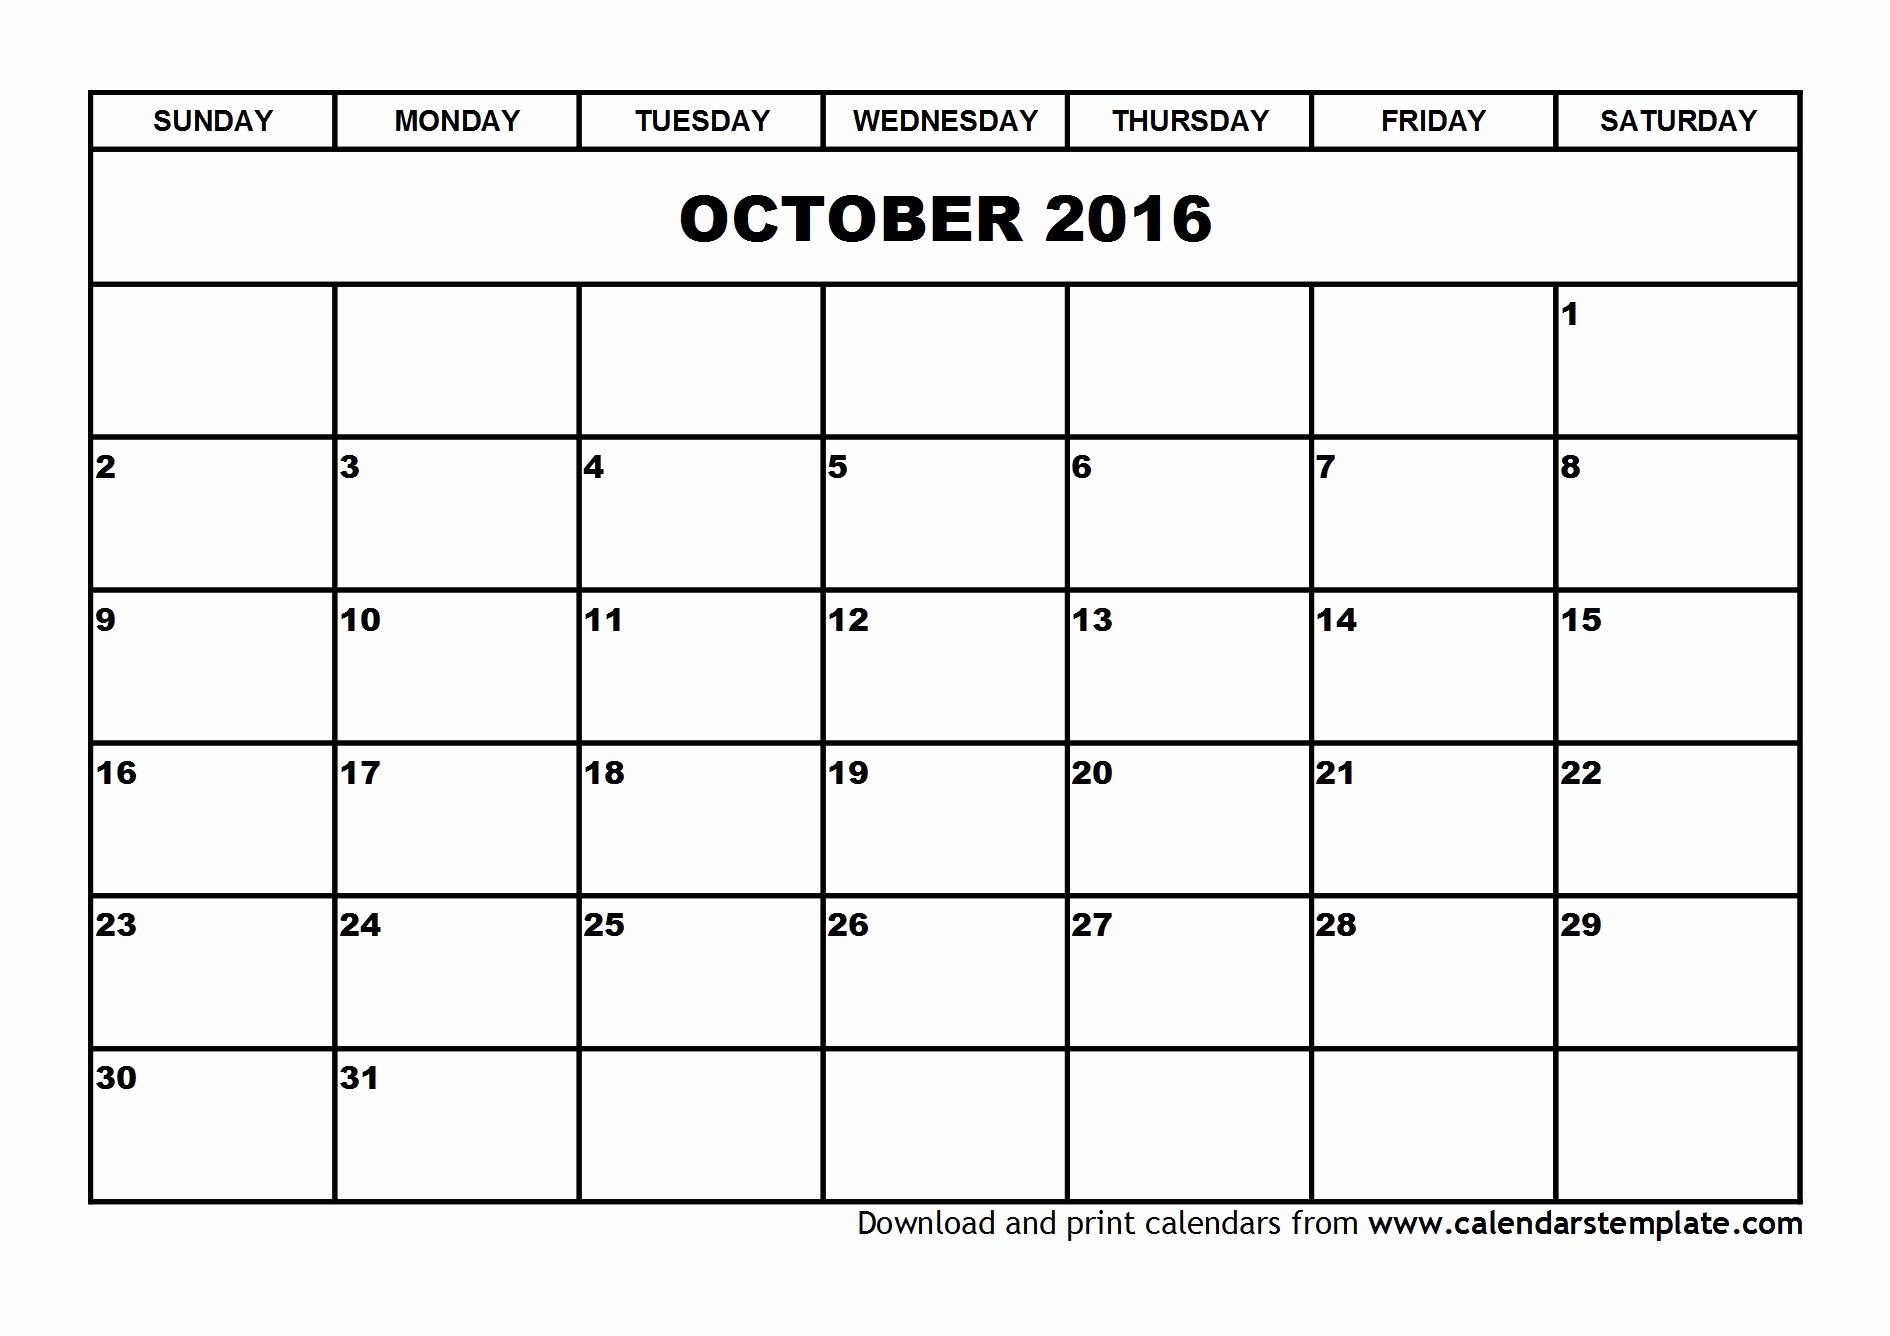 Free Printable Calendar 2016 Template Fresh October 2016 Calendar Template